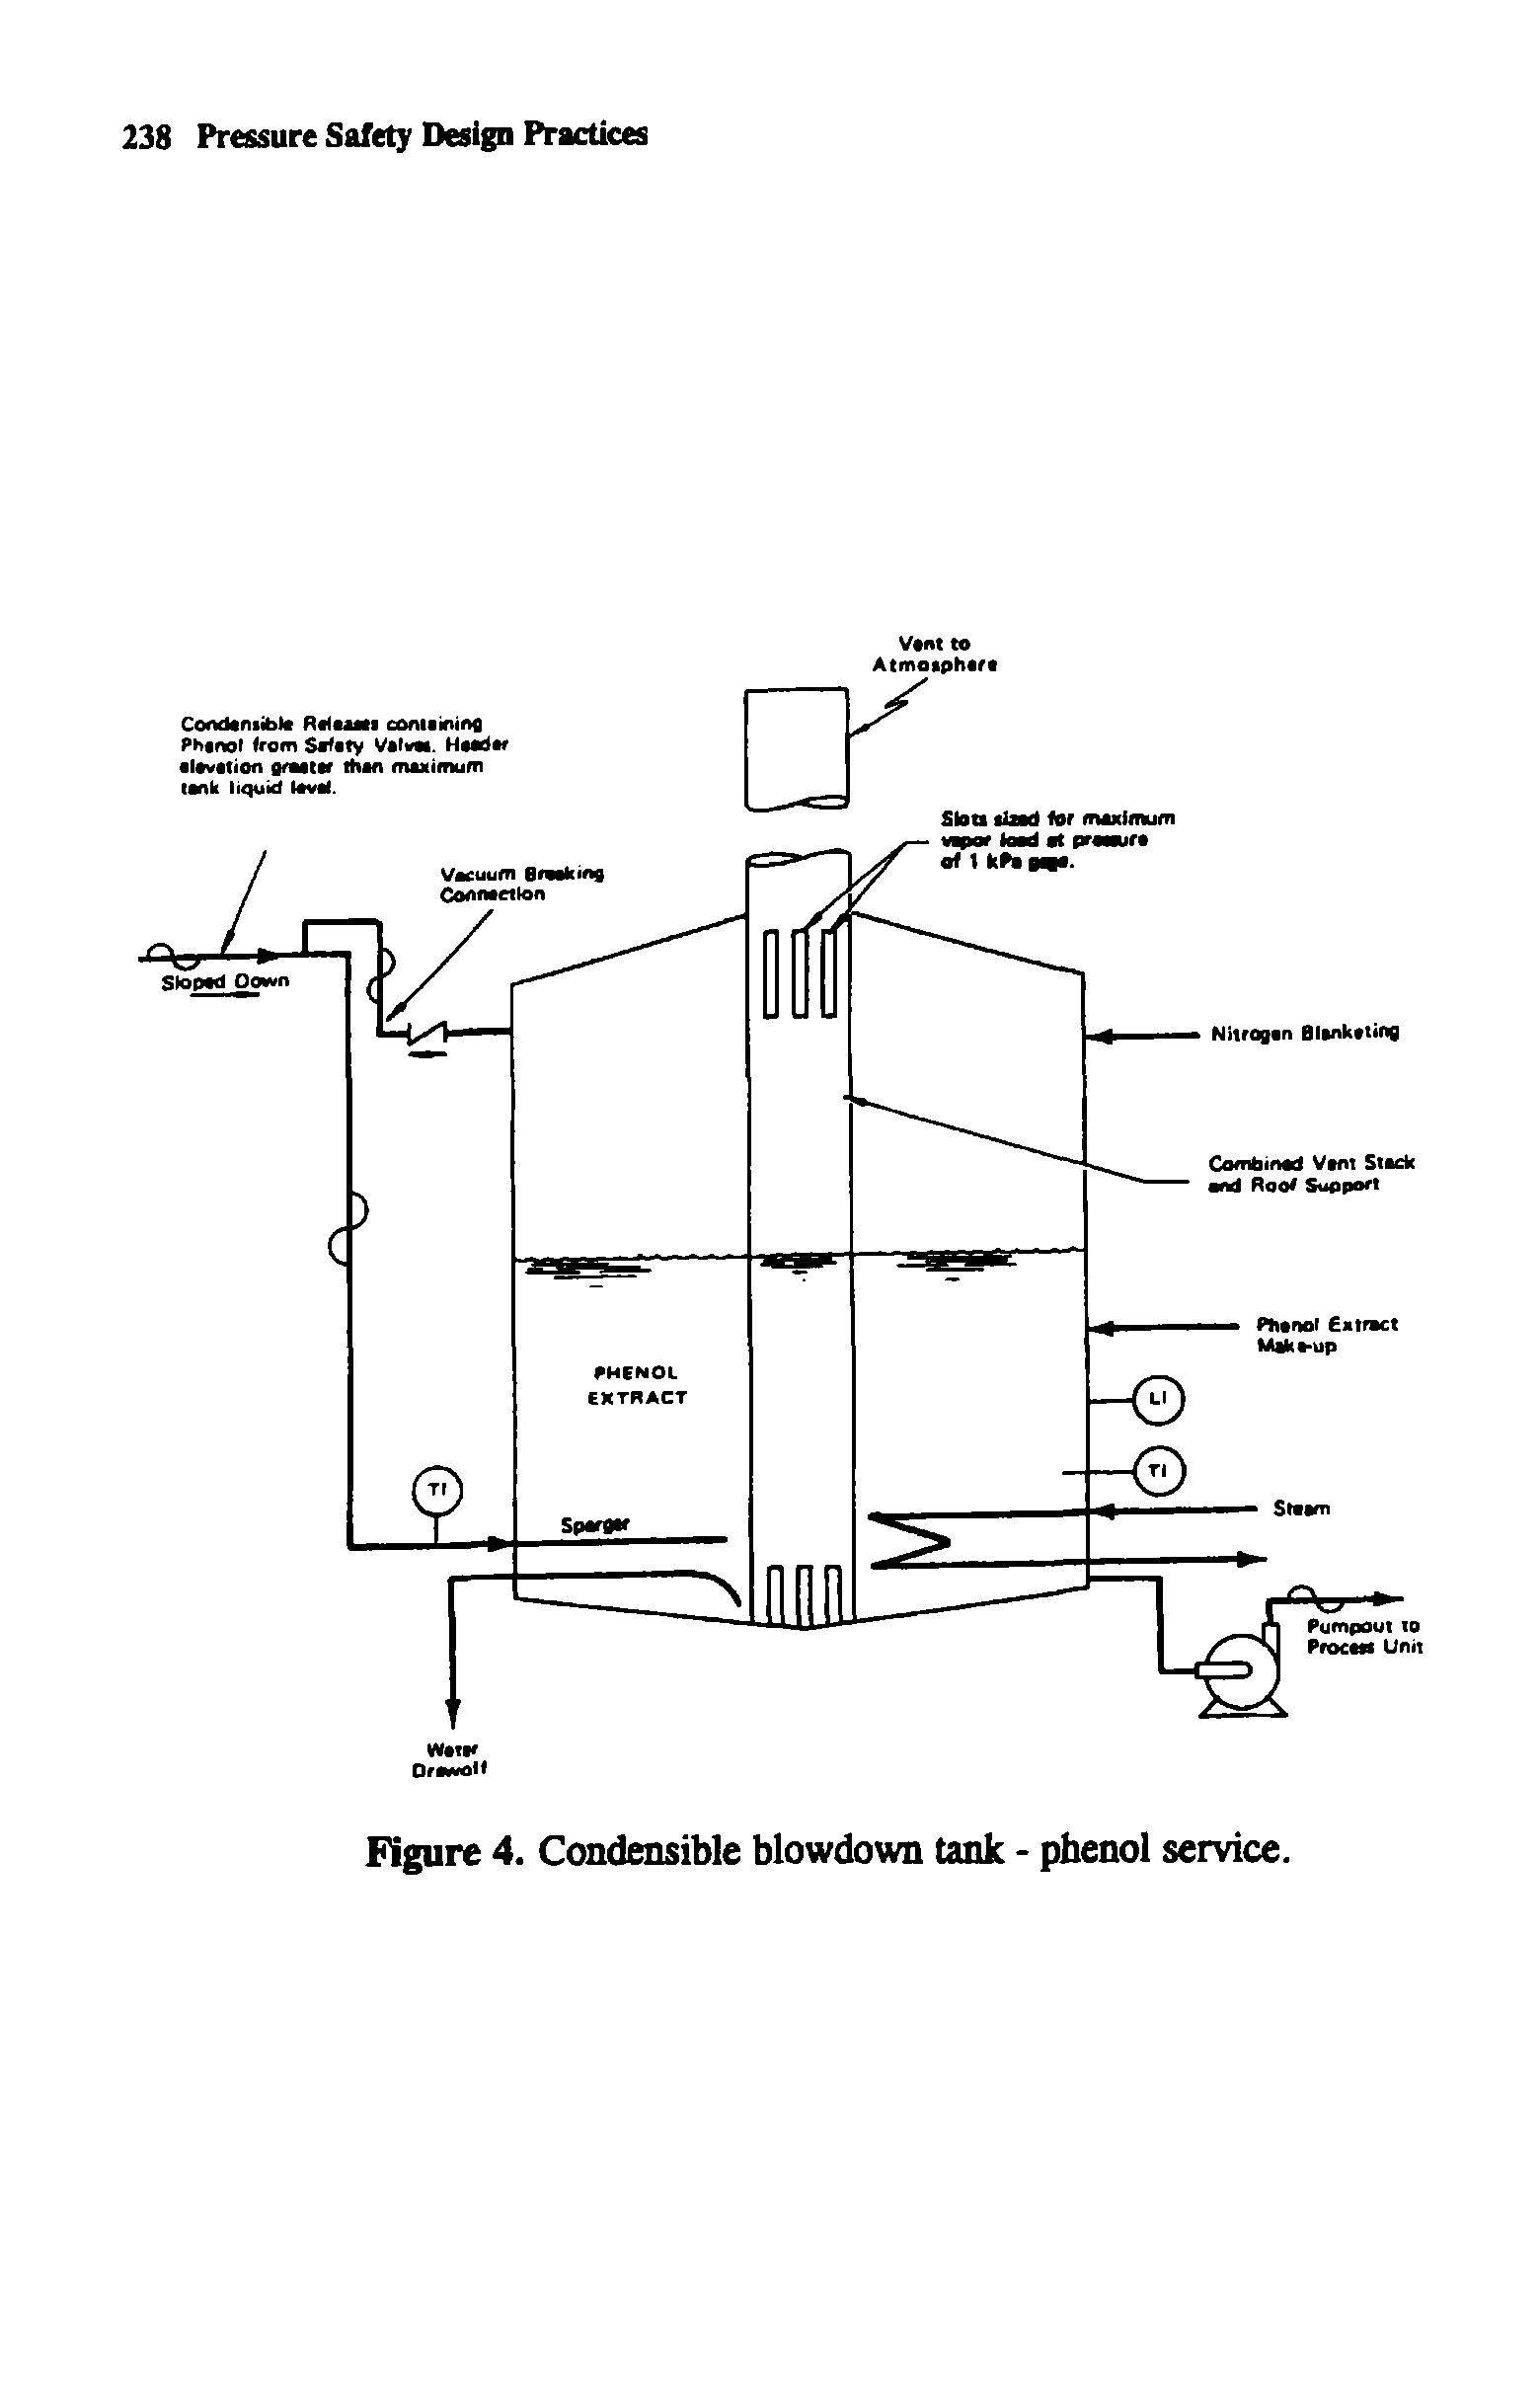 Figure 4. Condensible blowdown tank - phenol service.